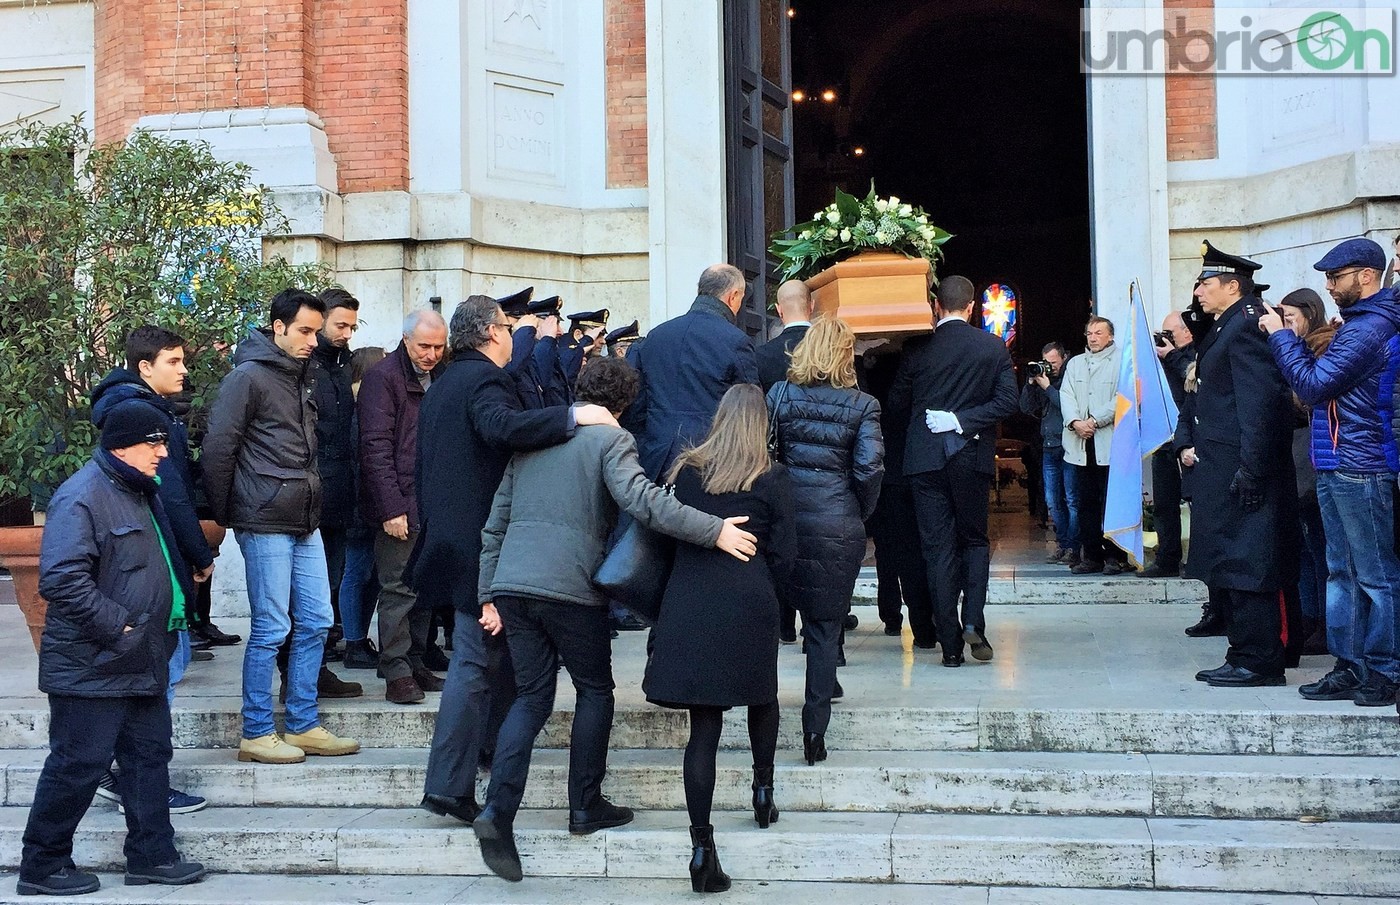 Funerali Maurizio Santoloci - 9 gennaio 2017 (3)